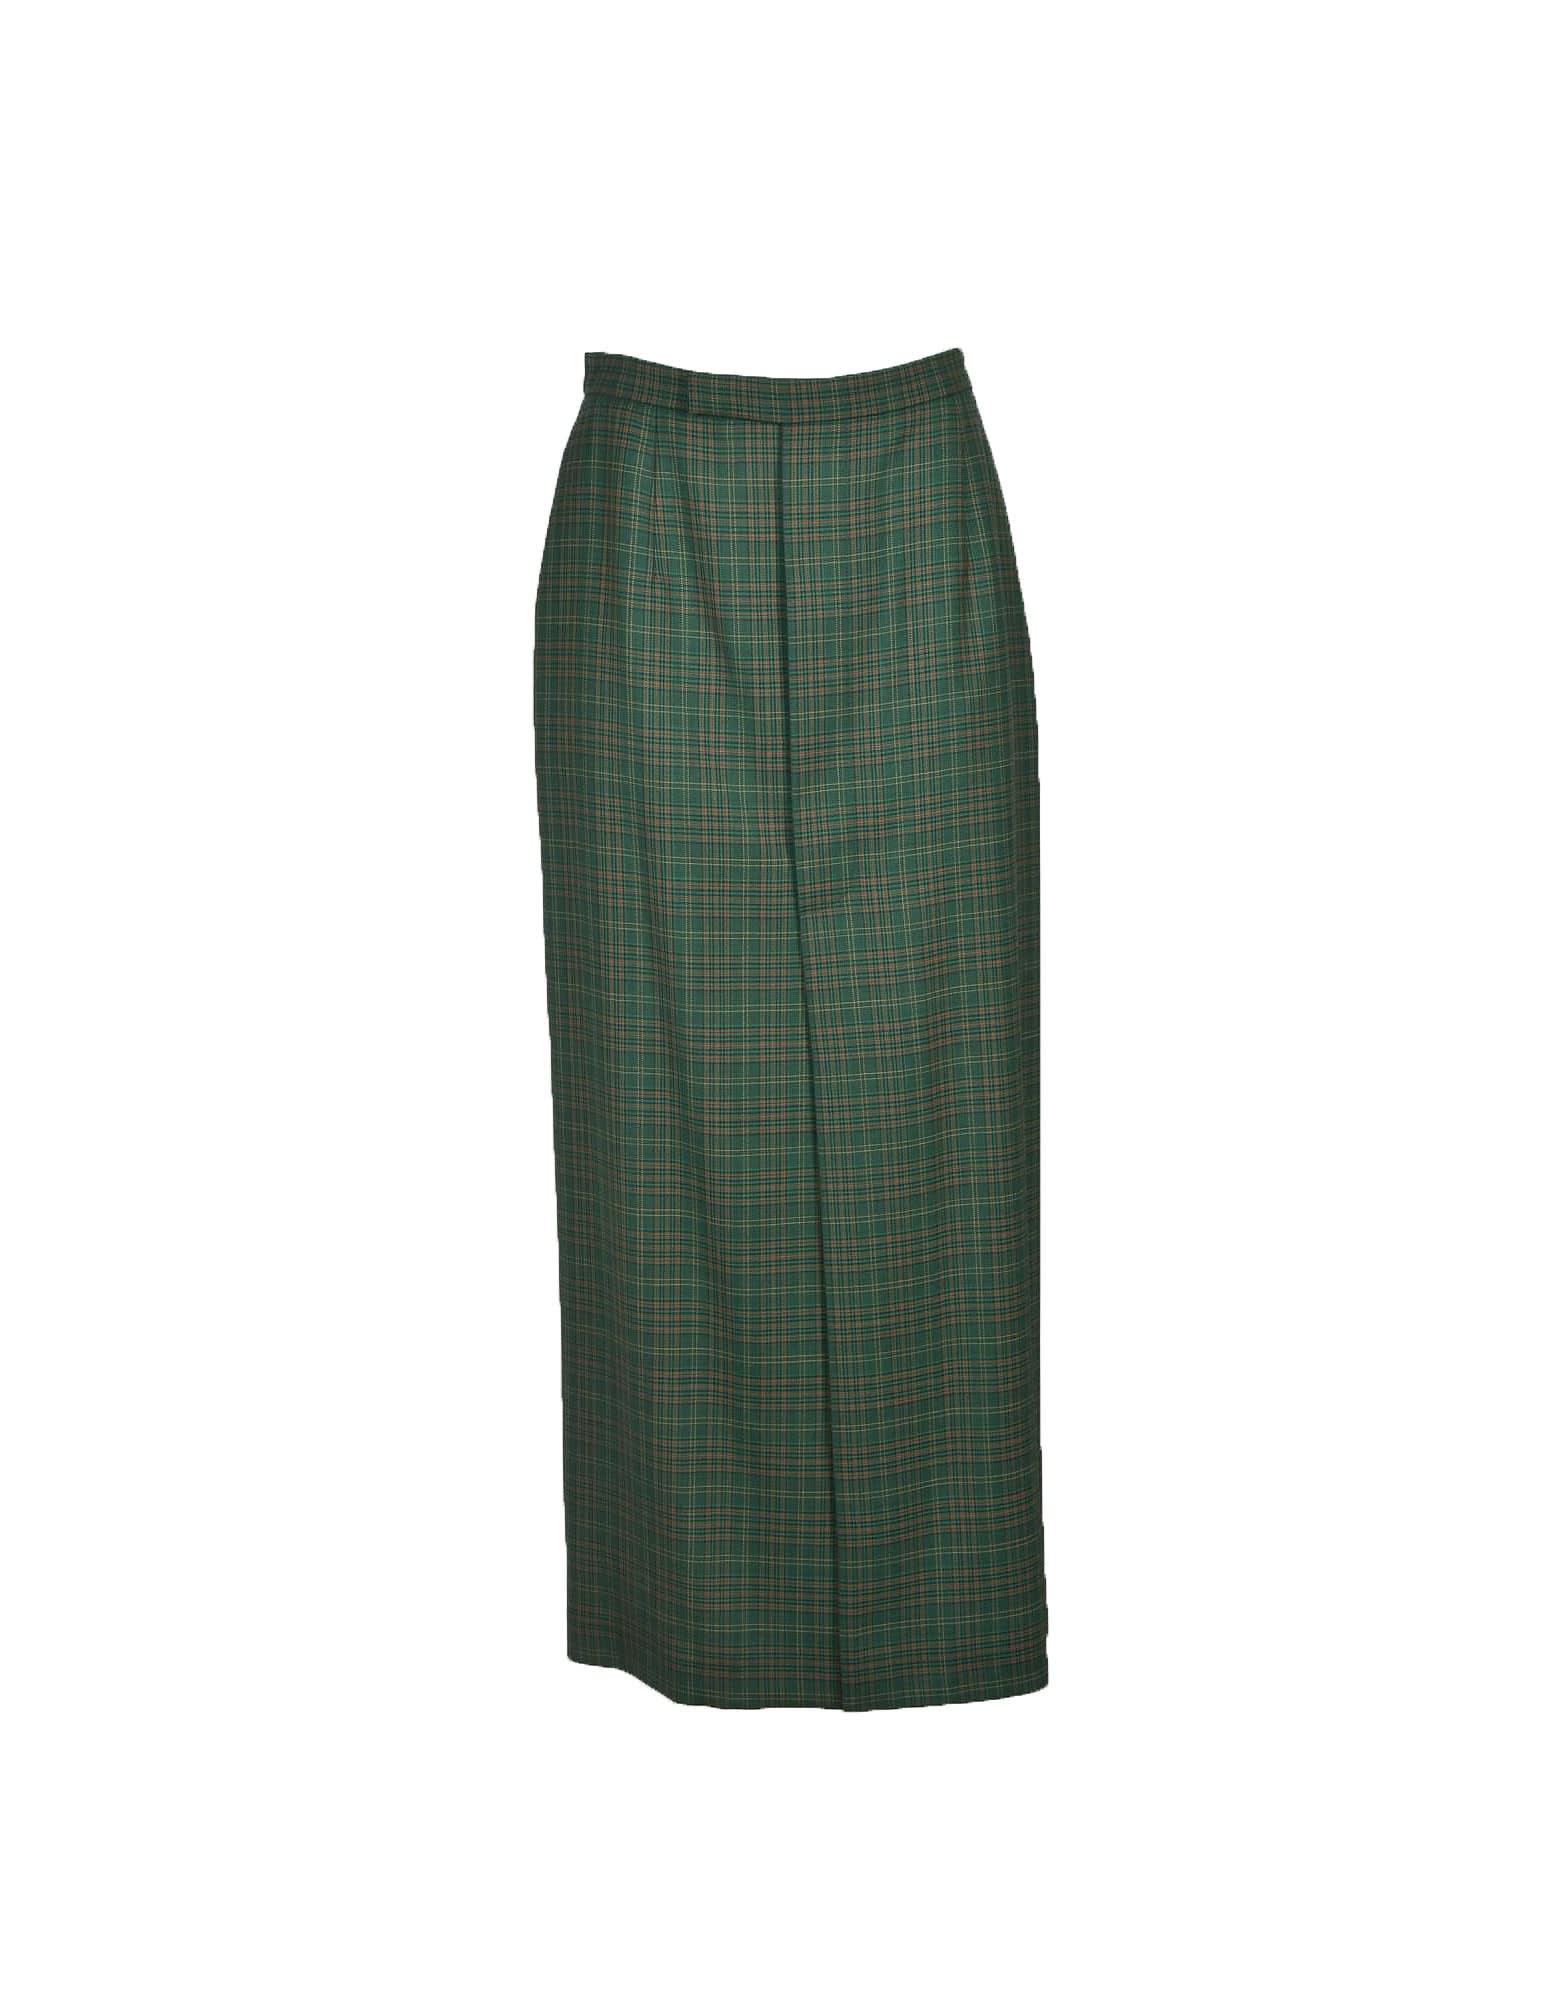 Vivienne Westwood Womens Green Skirt